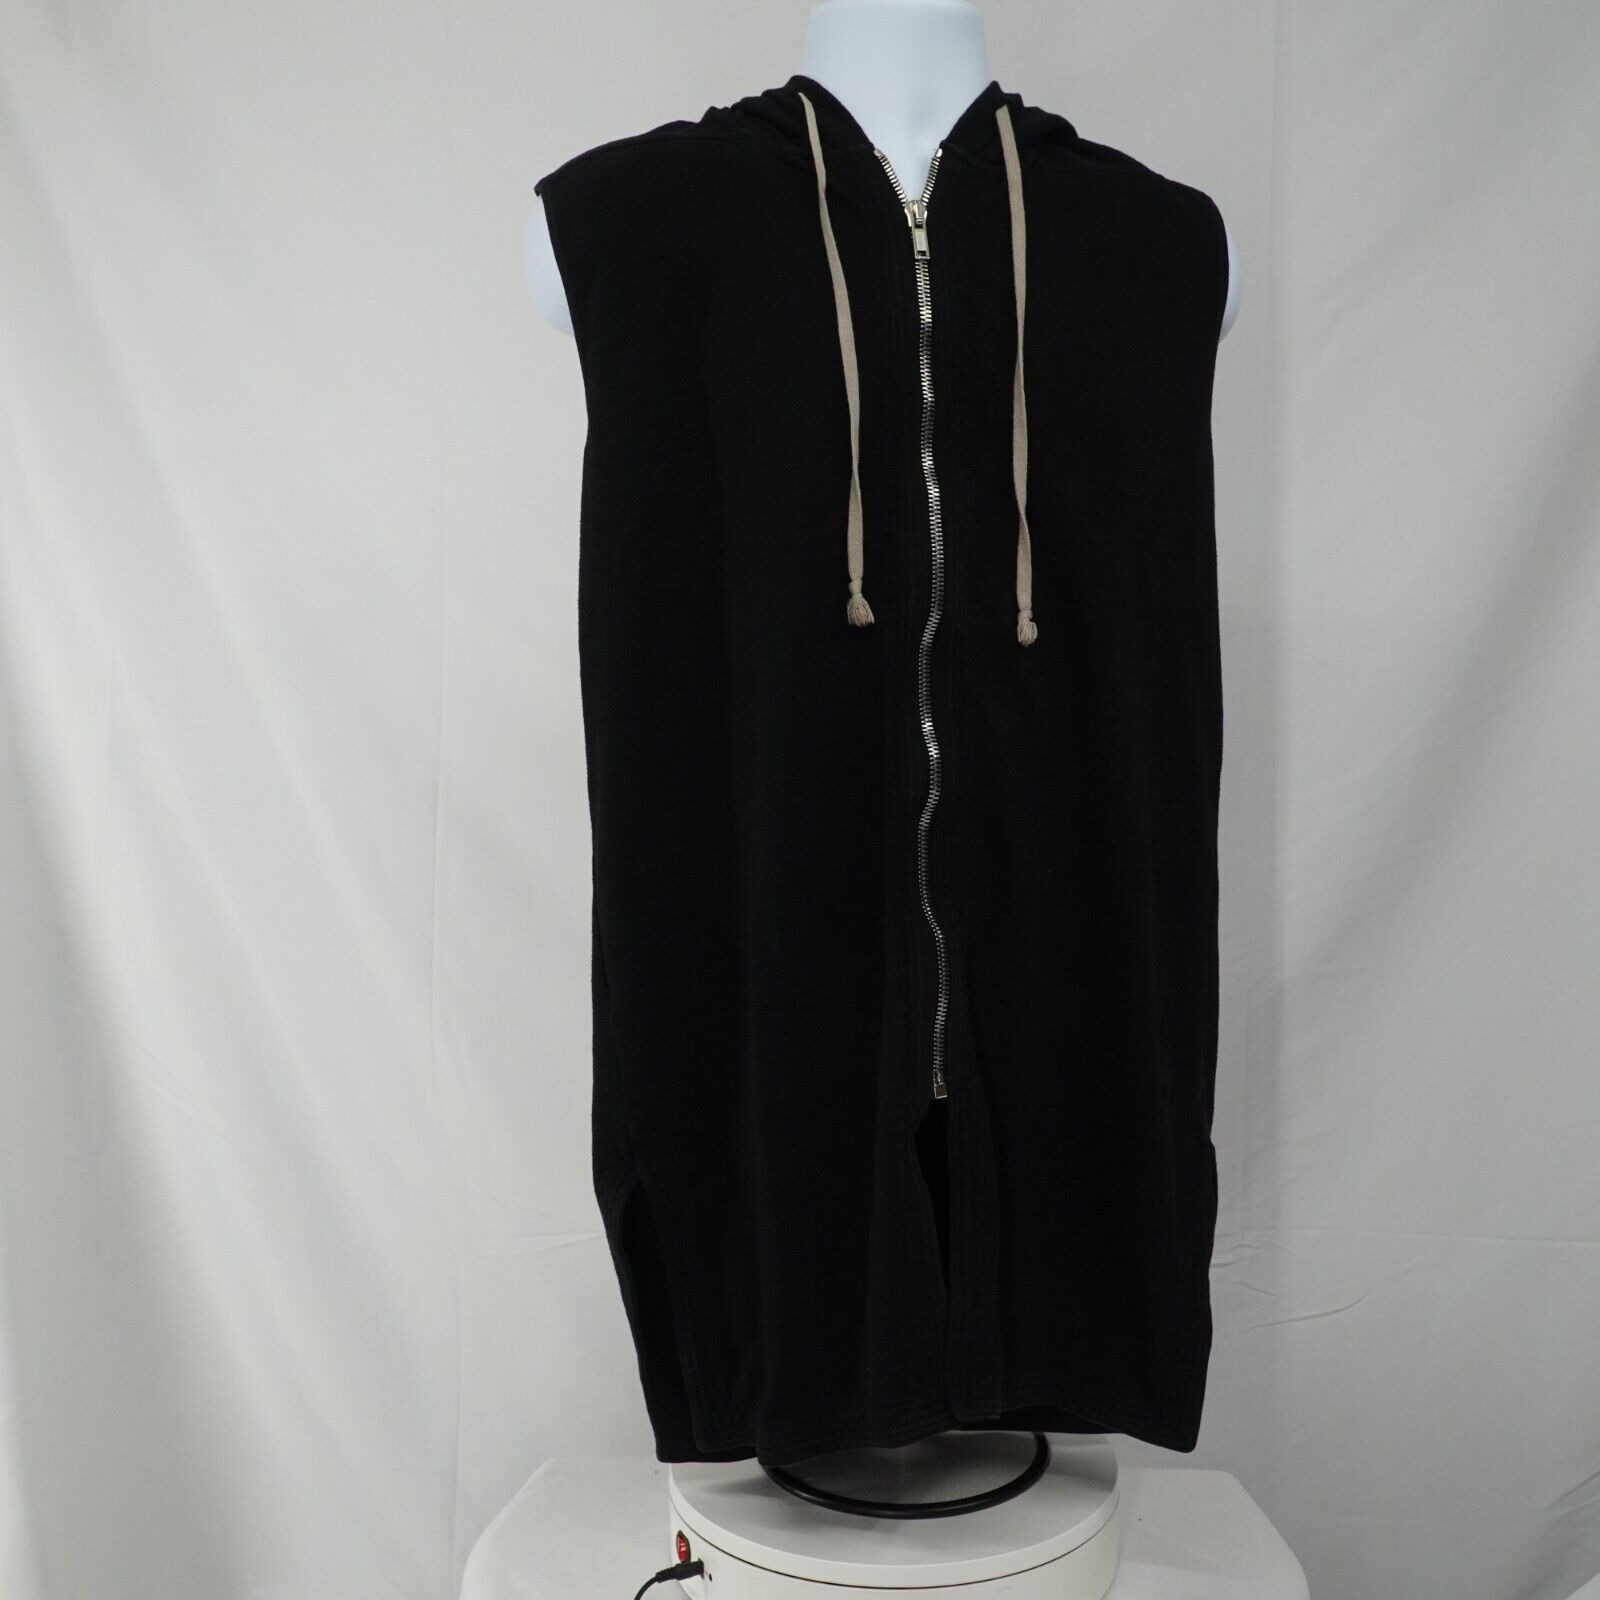 Black Zip Up Sleeveless Jacket Hoodie Cotton - Medium - 3